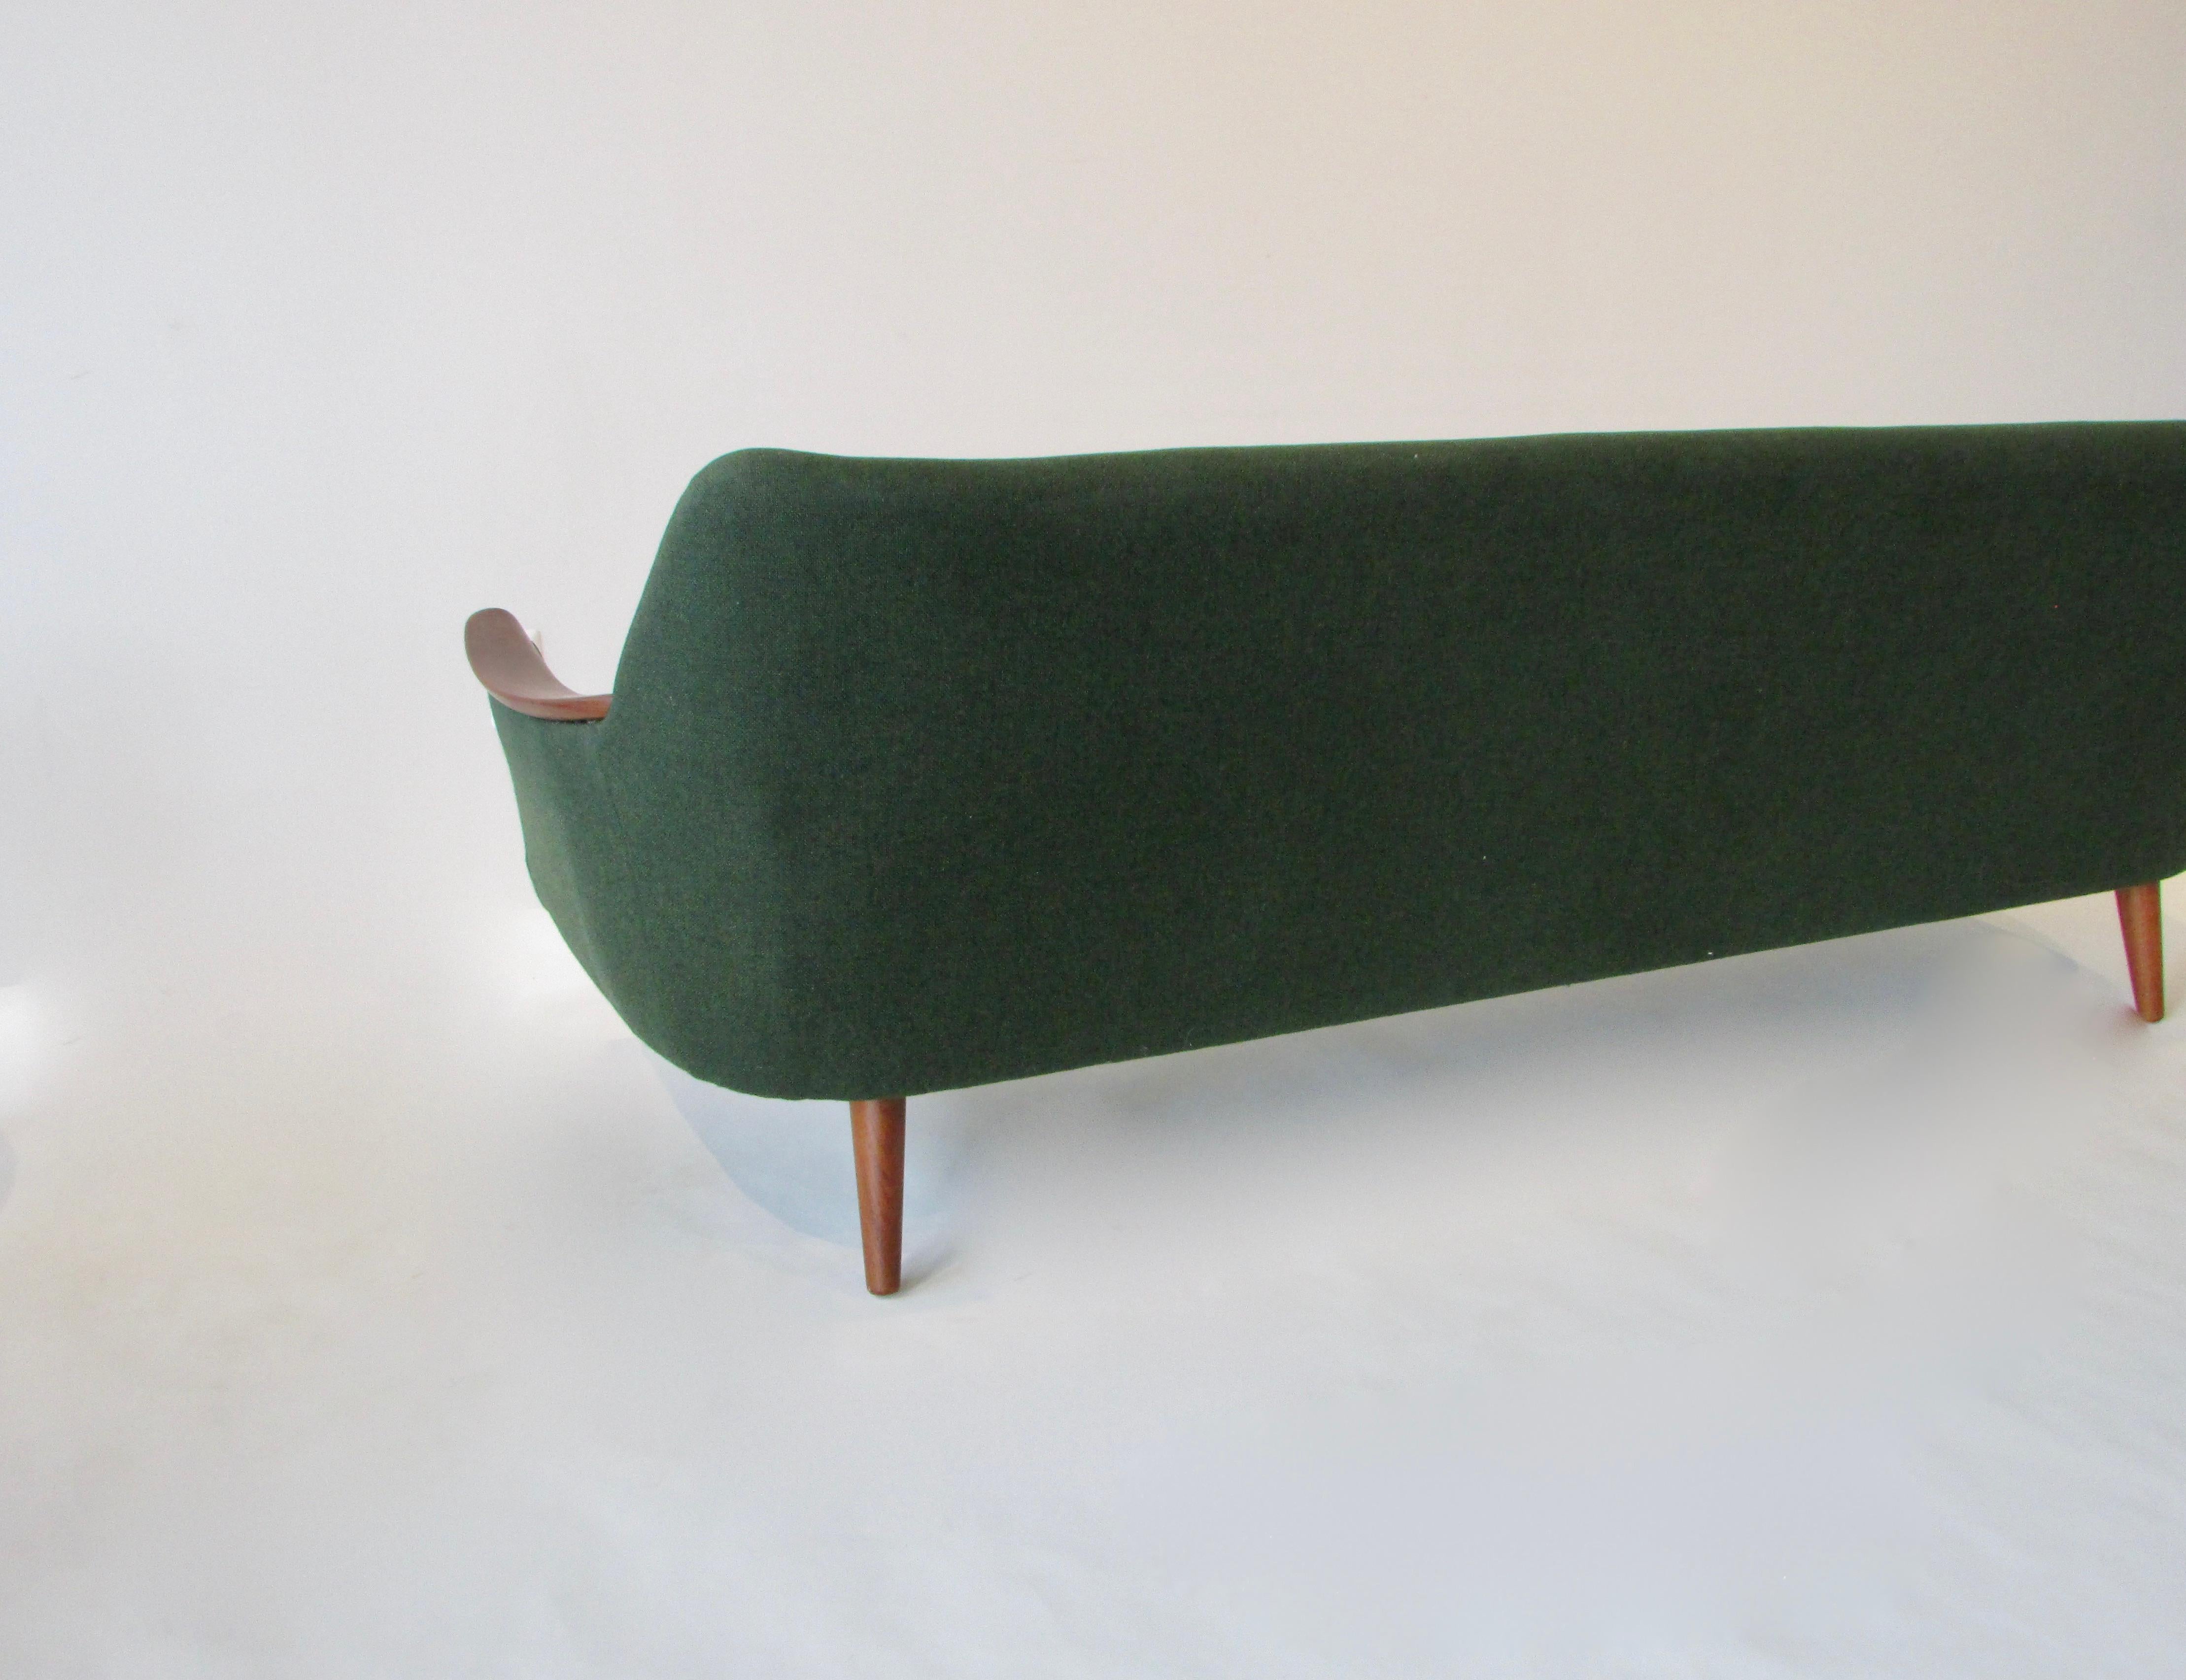 20th Century Teak Trimmed Hans Wegner Style Danish Couch as Found Original Condition